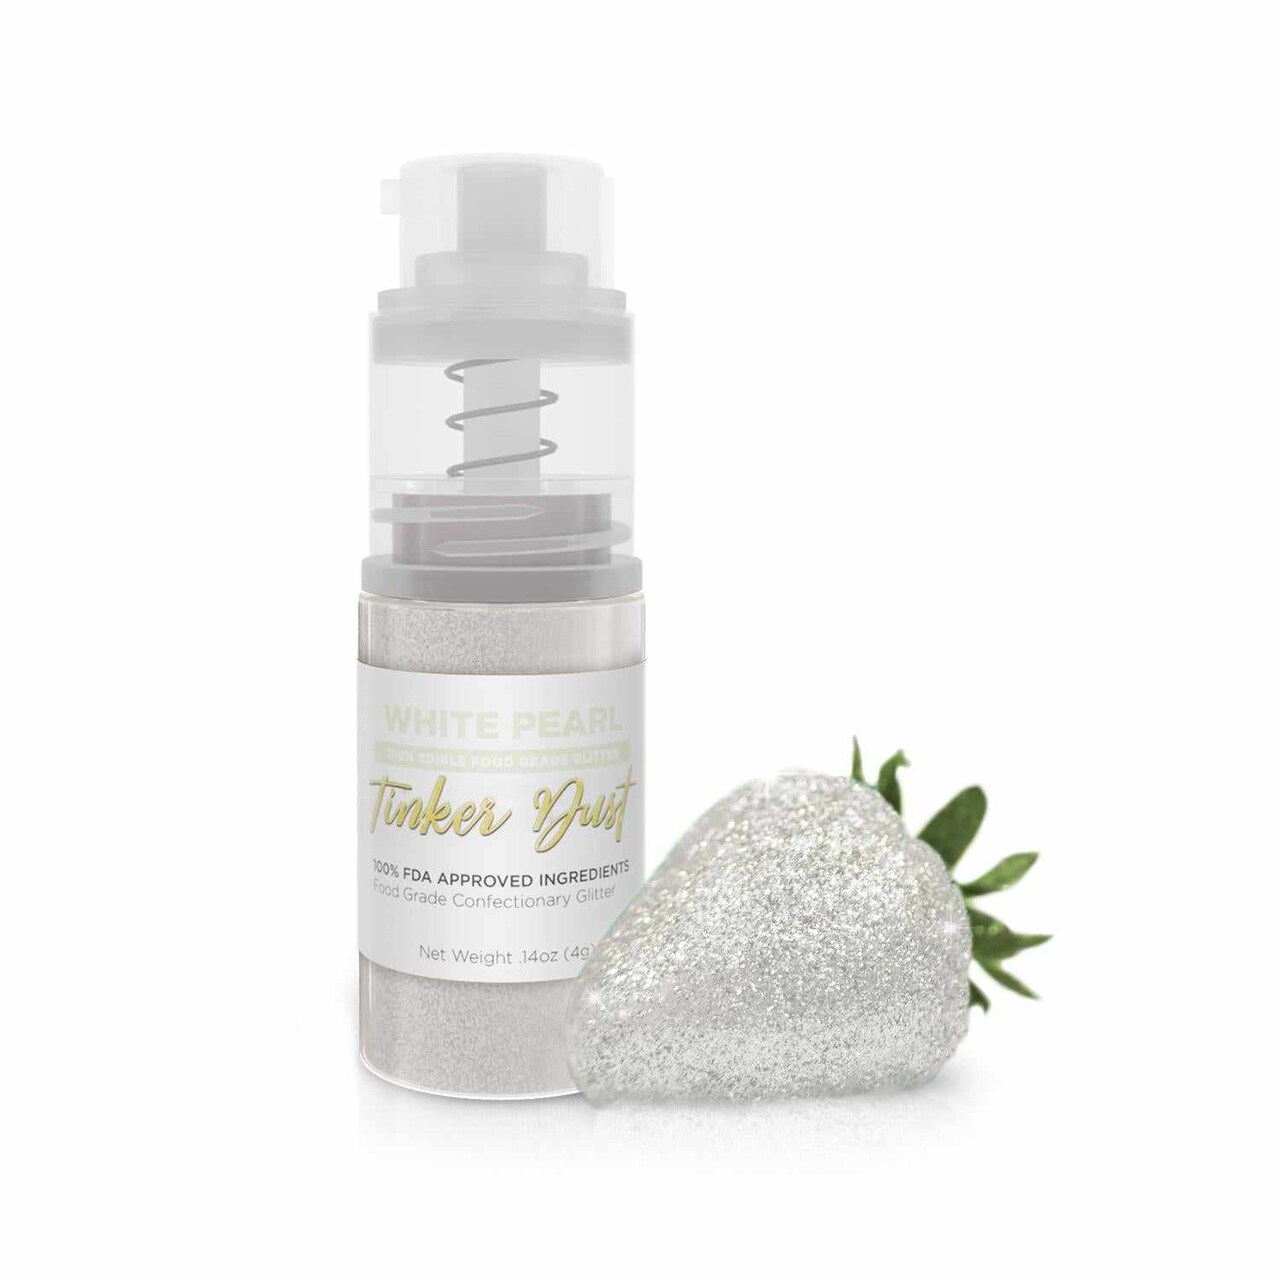 White Pearl Edible Glitter Spray - Edible Powder Dust Spray Glitter for  Food, Drinks, Strawberries, Muffins, Cake Decorating. FDA Compliant (4 Gram  Pump)